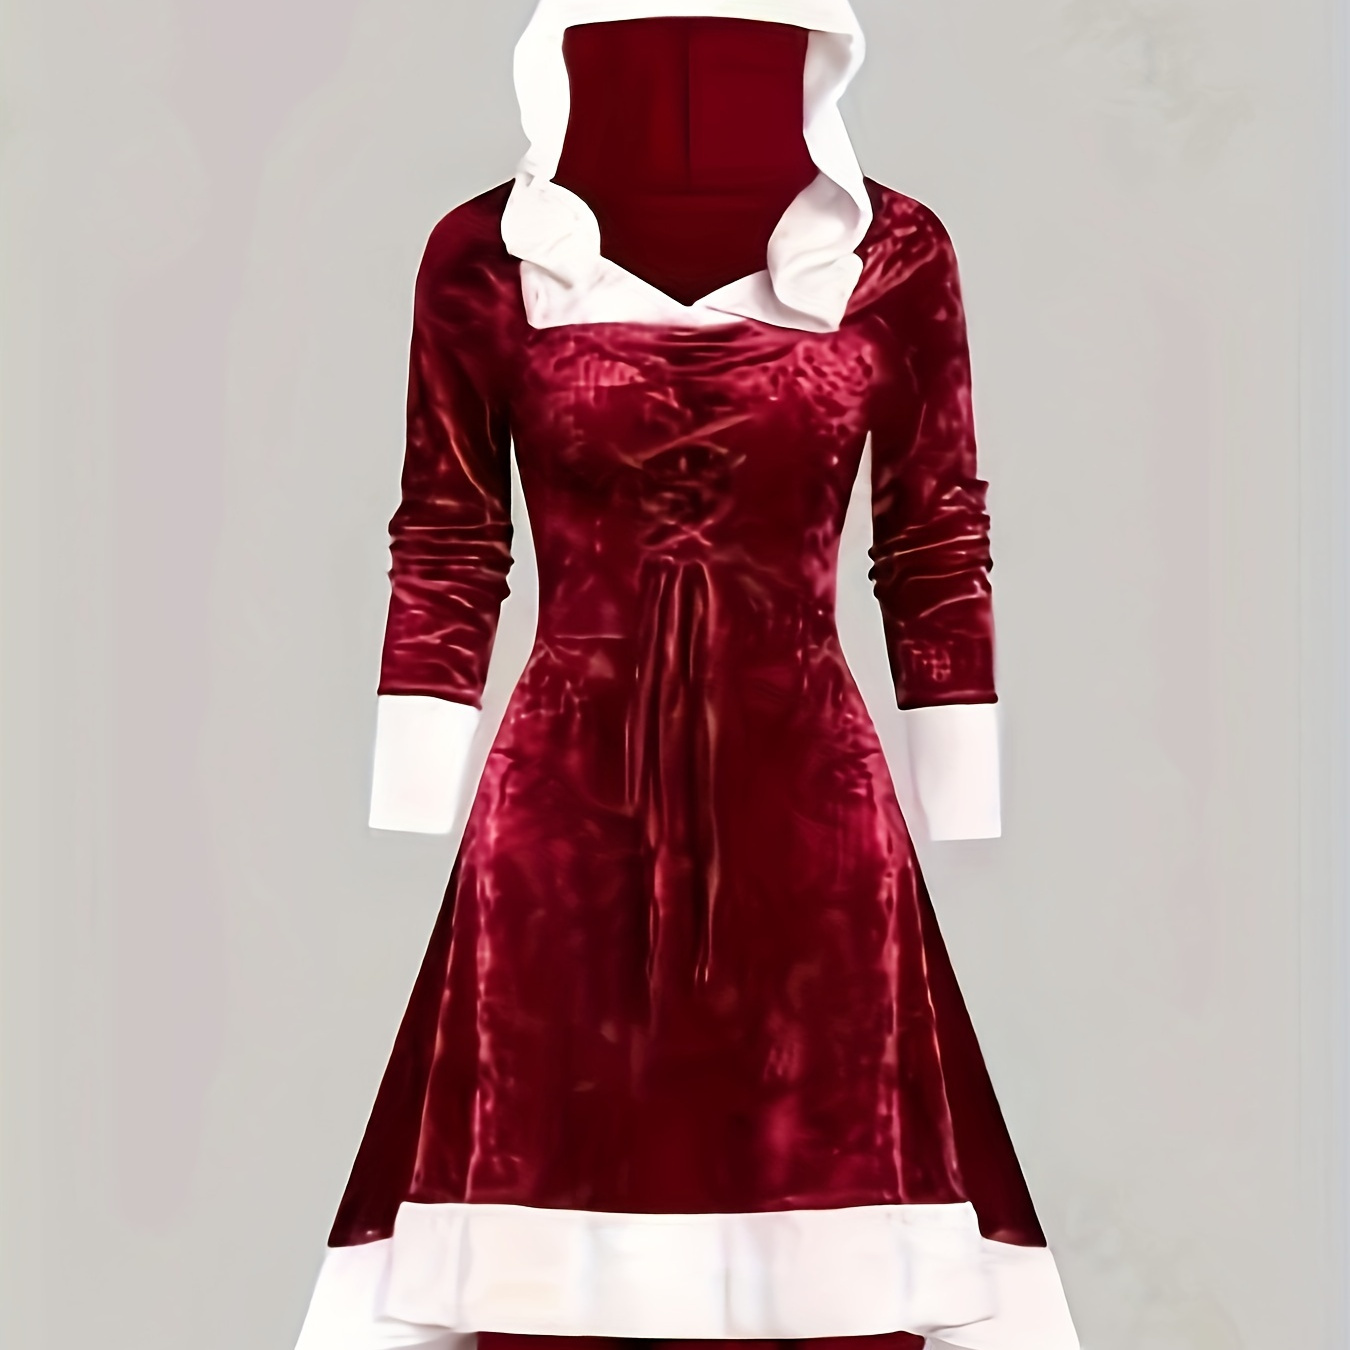 

Contrast Trim Drawstring Hooded Dress, Vintage Long Sleeve Alien Dress, Women's Clothing